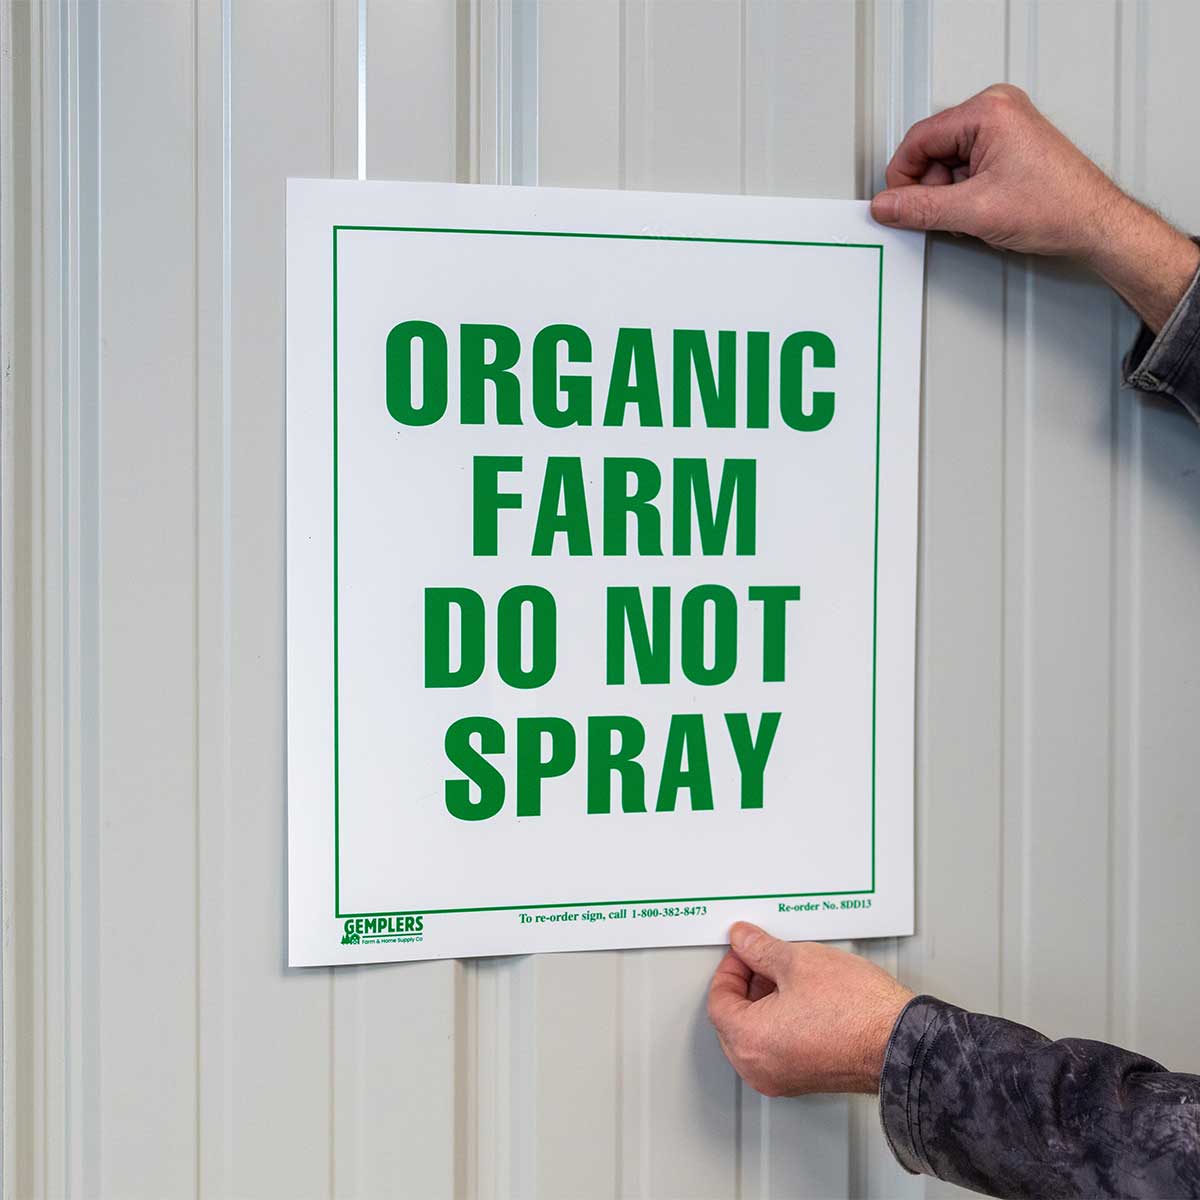 Gemplers "Organic Farm - Do Not Spray" Sign